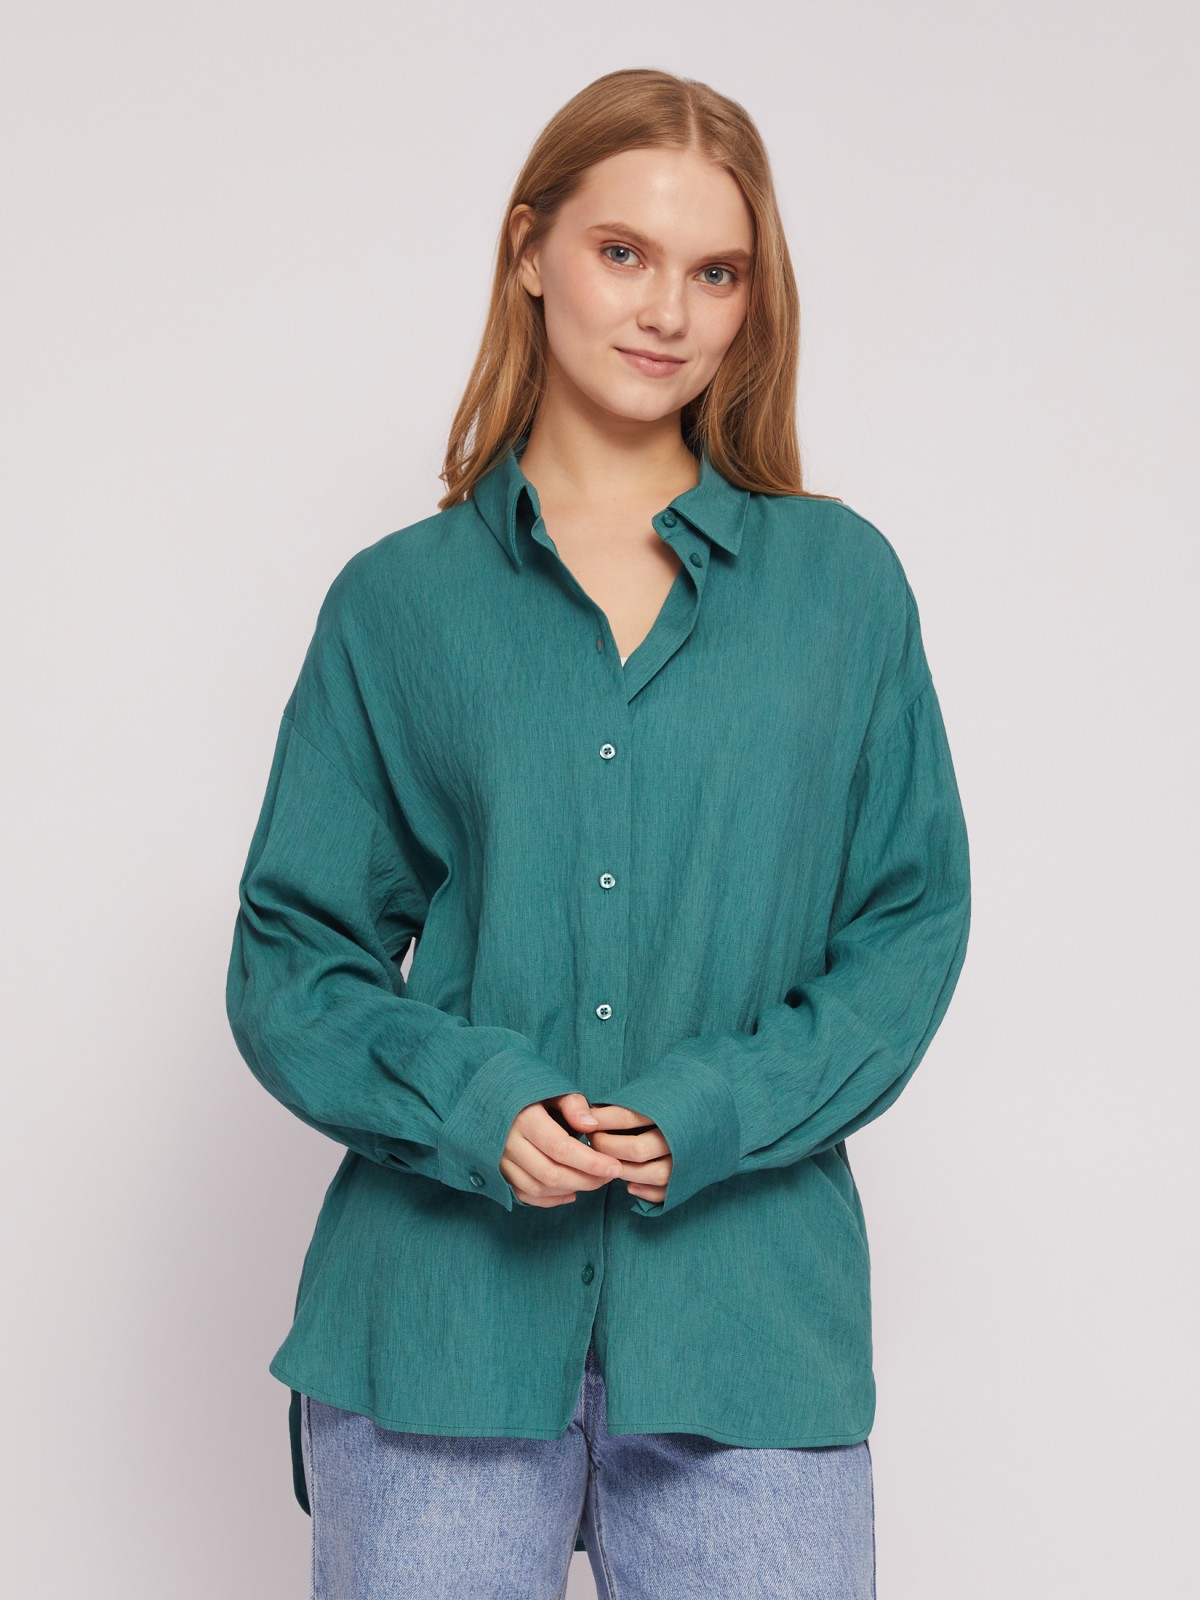 Рубашка оверсайз силуэта с длинным рукавом zolla 02421117Y022, цвет зеленый, размер XS - фото 5